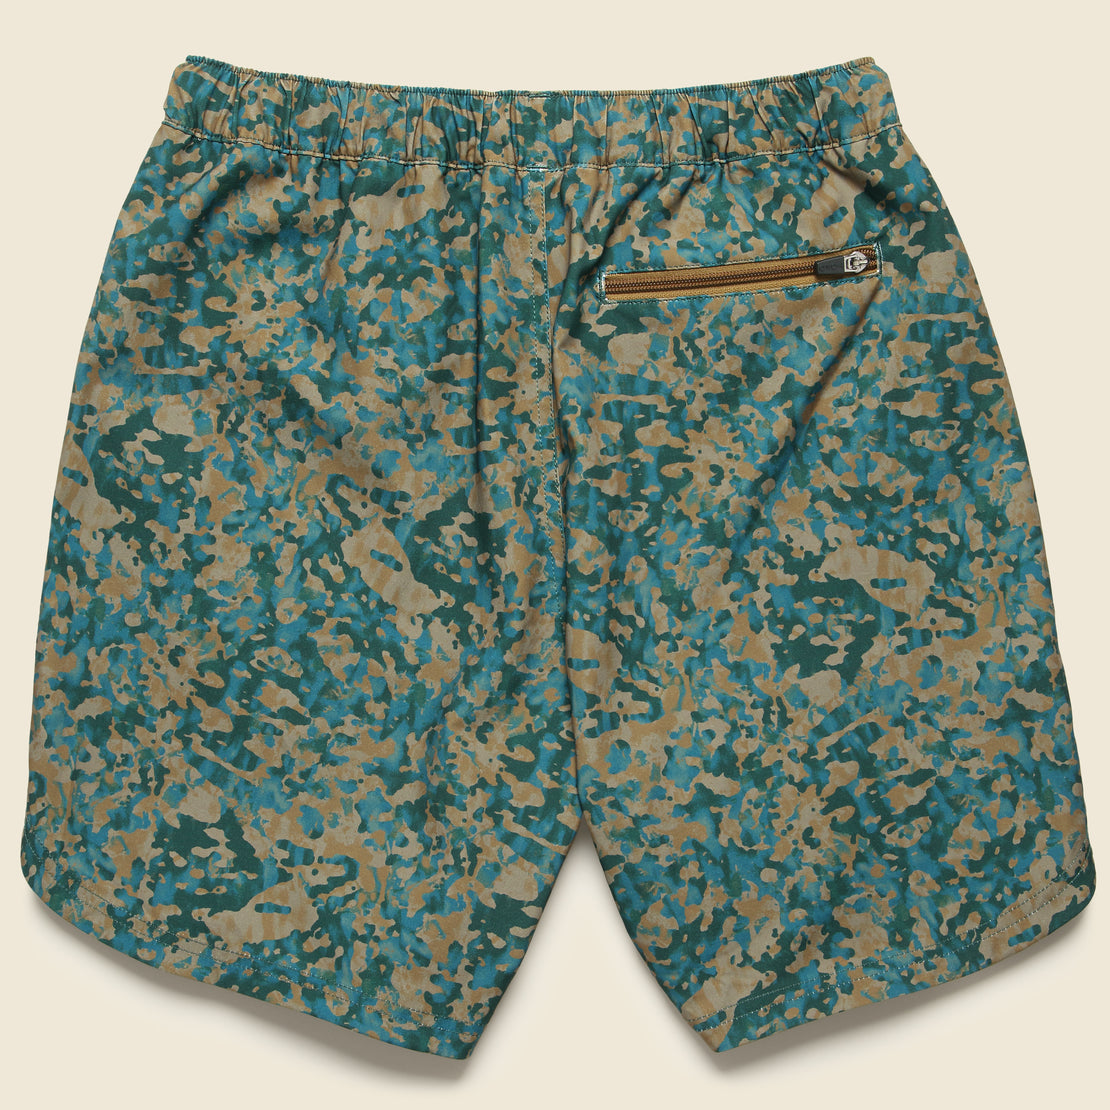 River Shorts - Sahara Nebula - Topo Designs - STAG Provisions - Shorts - Lounge